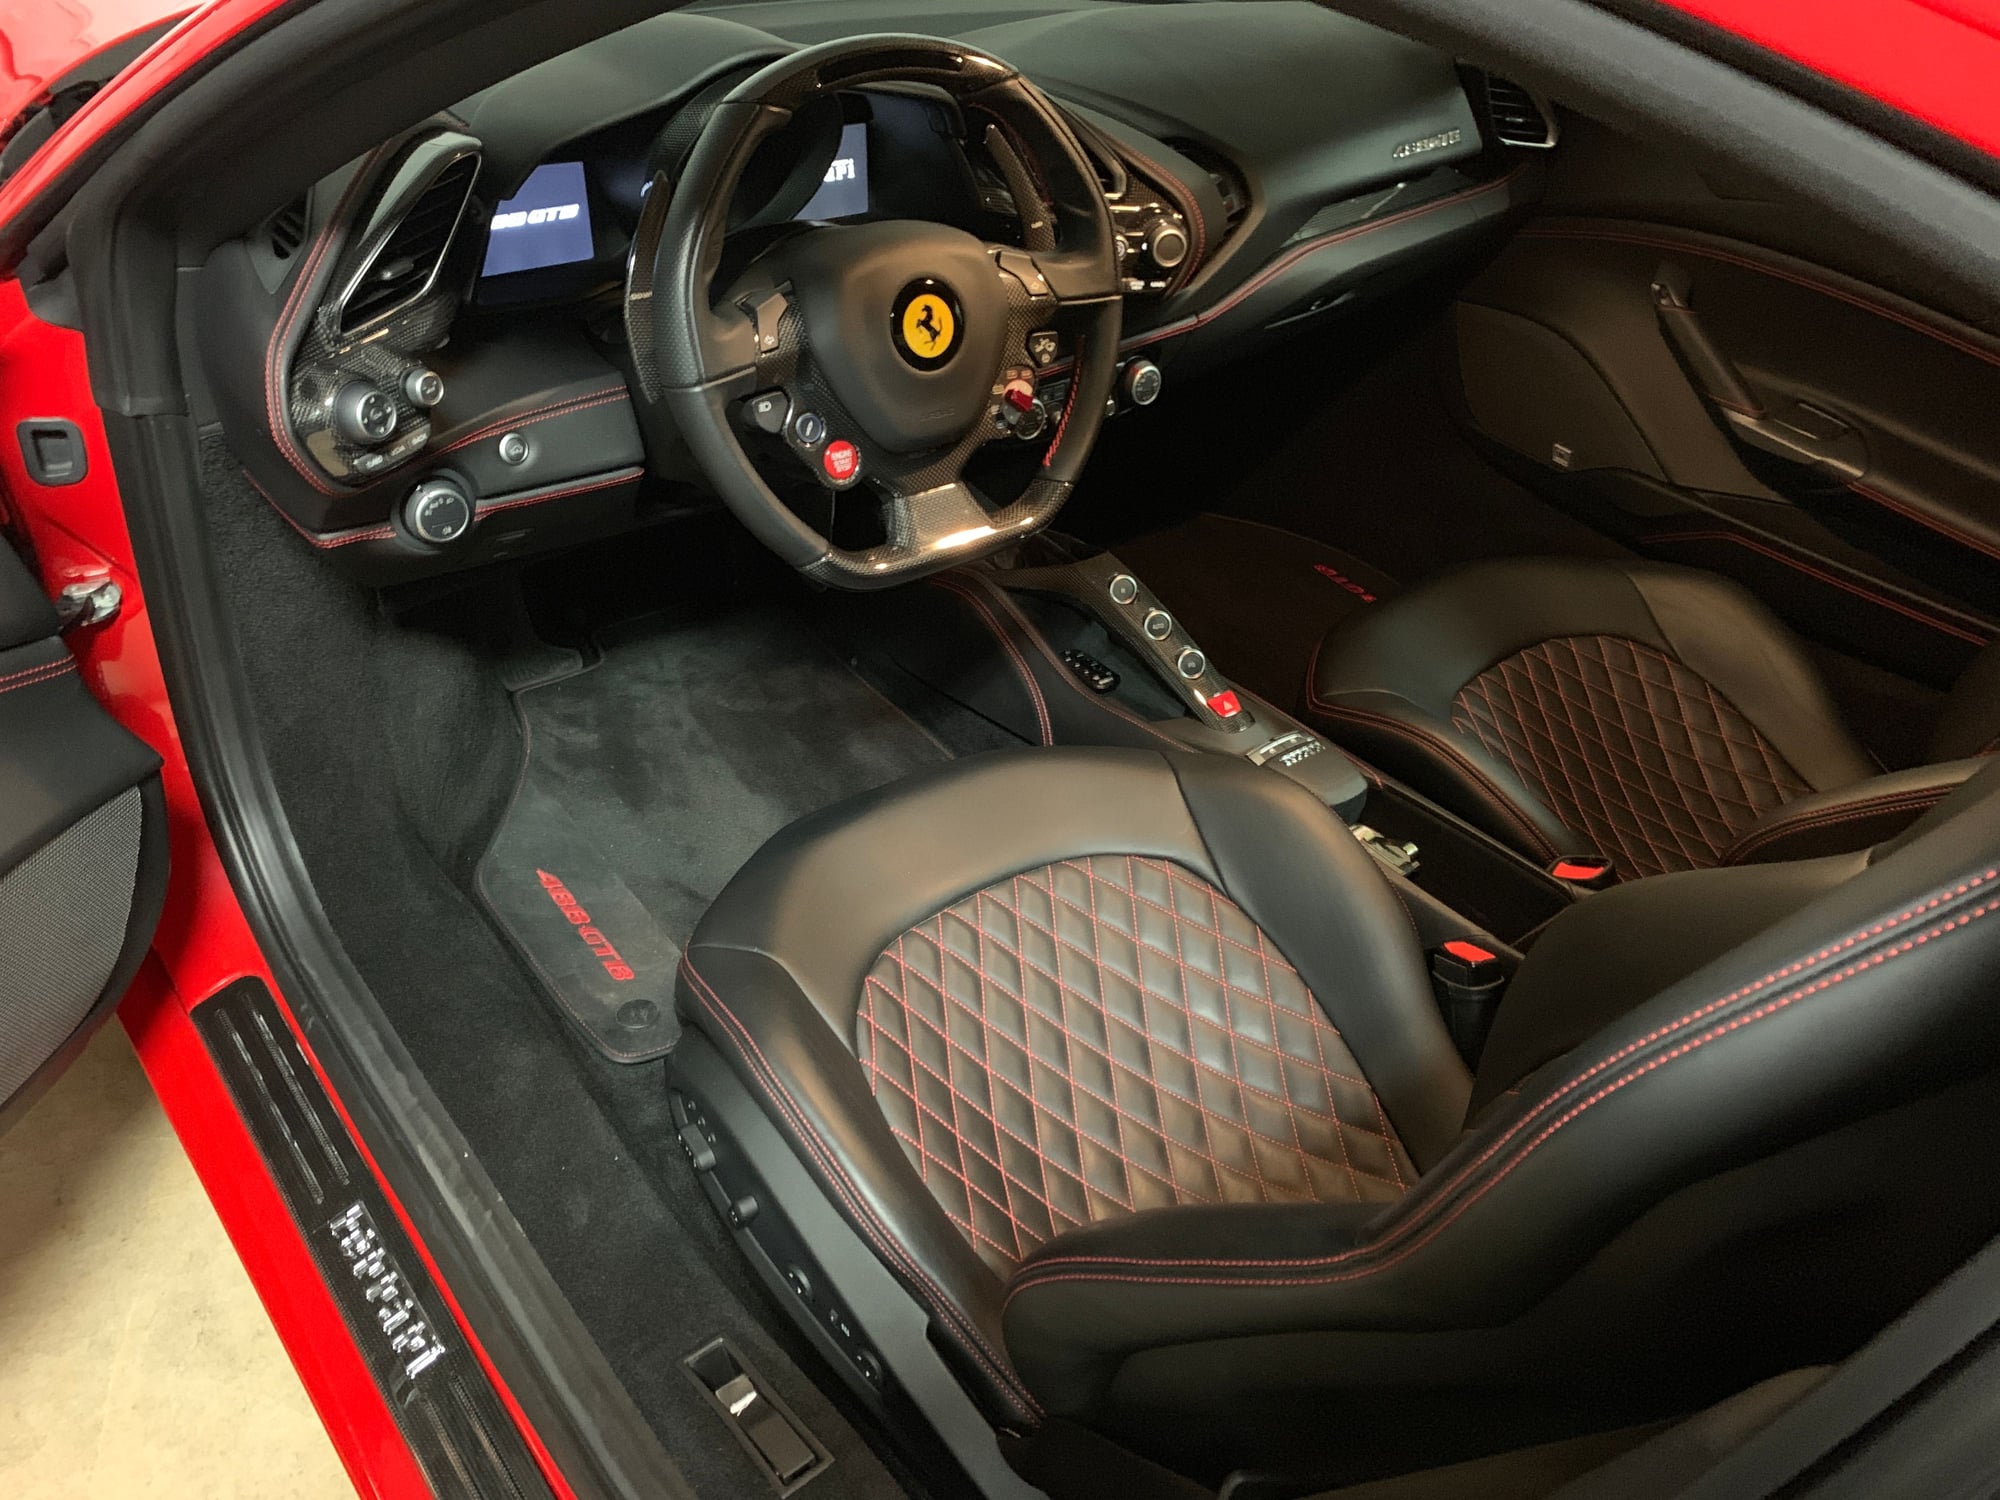 2017 Ferrari 488 GTB - 2017 Ferrari 488 GTB "One-Of-a-Kind" Bonus Car - Used - VIN ZFF79ALA3H0227176 - 4,640 Miles - 8 cyl - 2WD - Automatic - Coupe - Red - Shreveport, LA 71106, United States